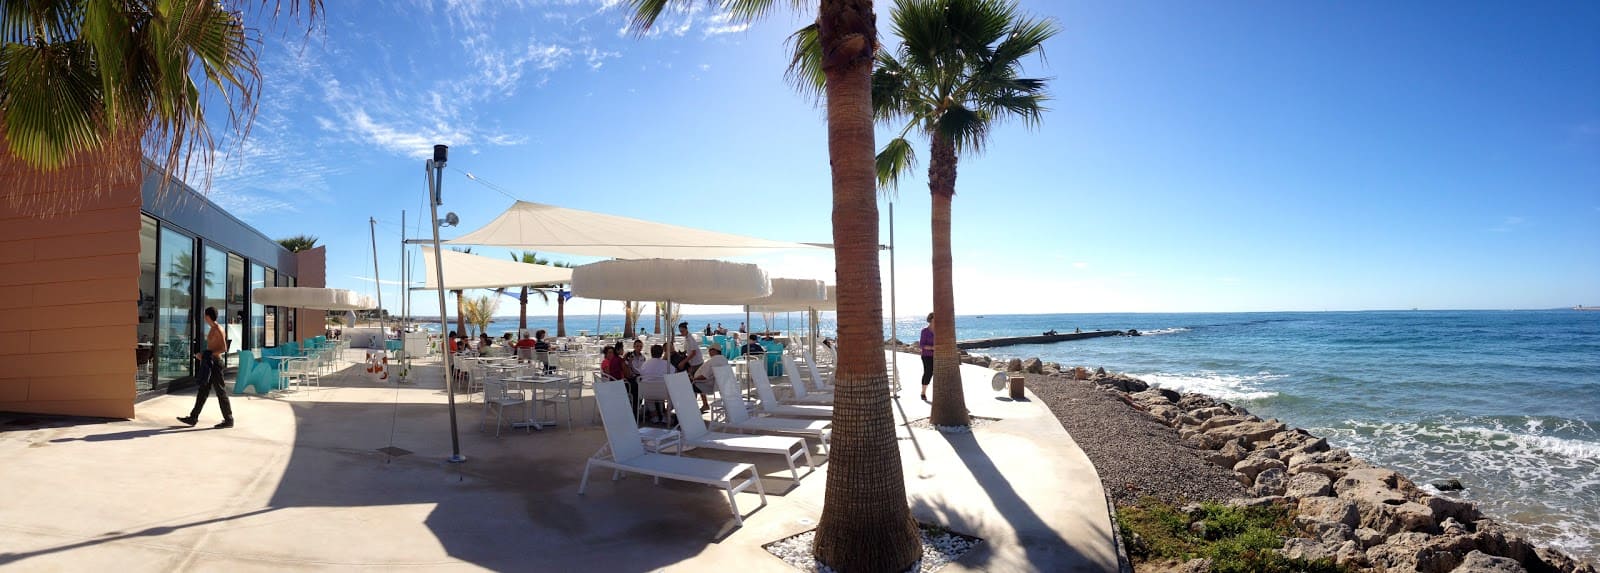 Anima Beach Club wedding venue for event at Palma de Mallorca